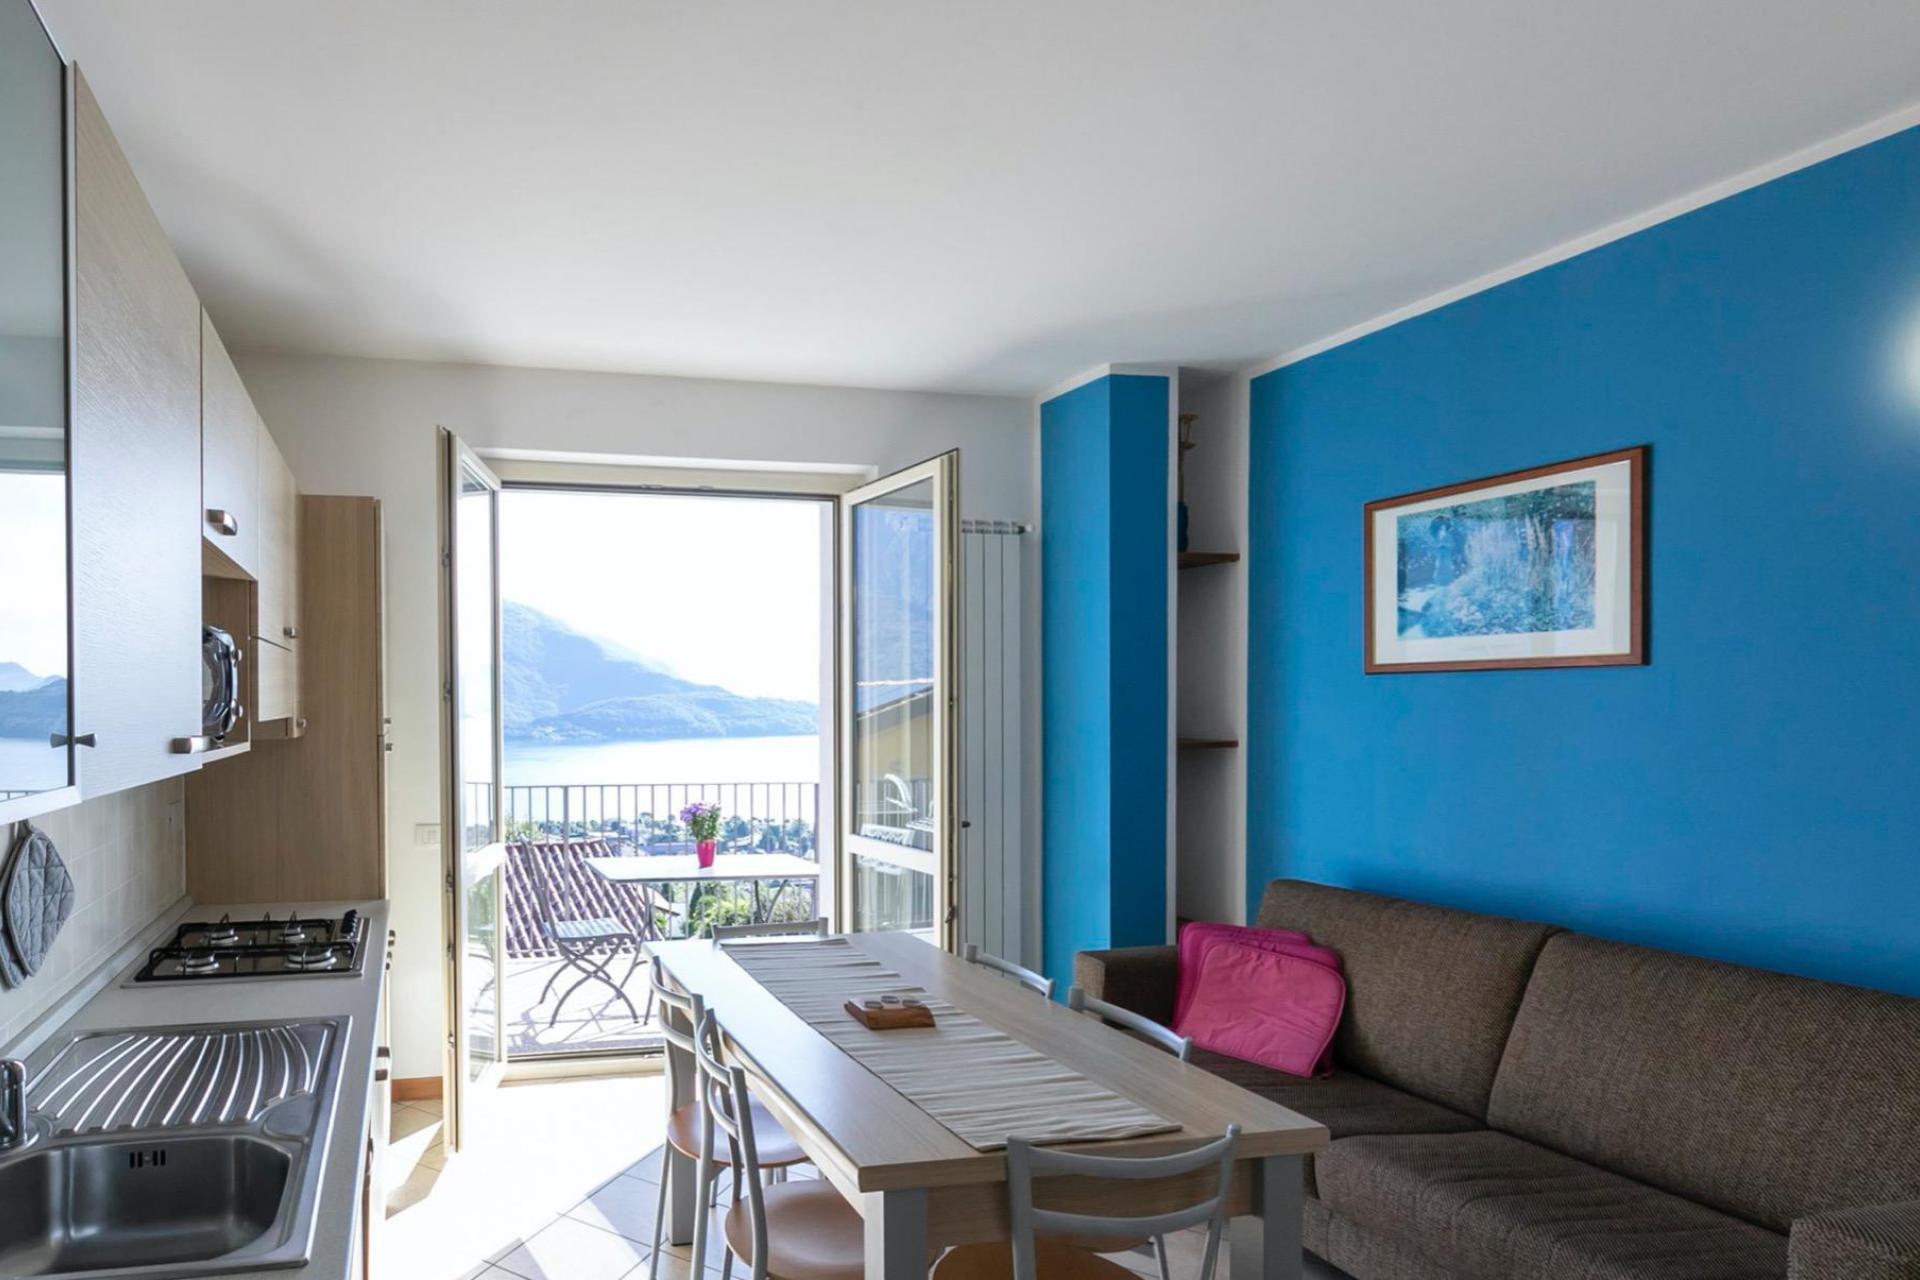 Agriturismo Lake Como and Lake Garda Residence lake Como, child-friendly and amazing views